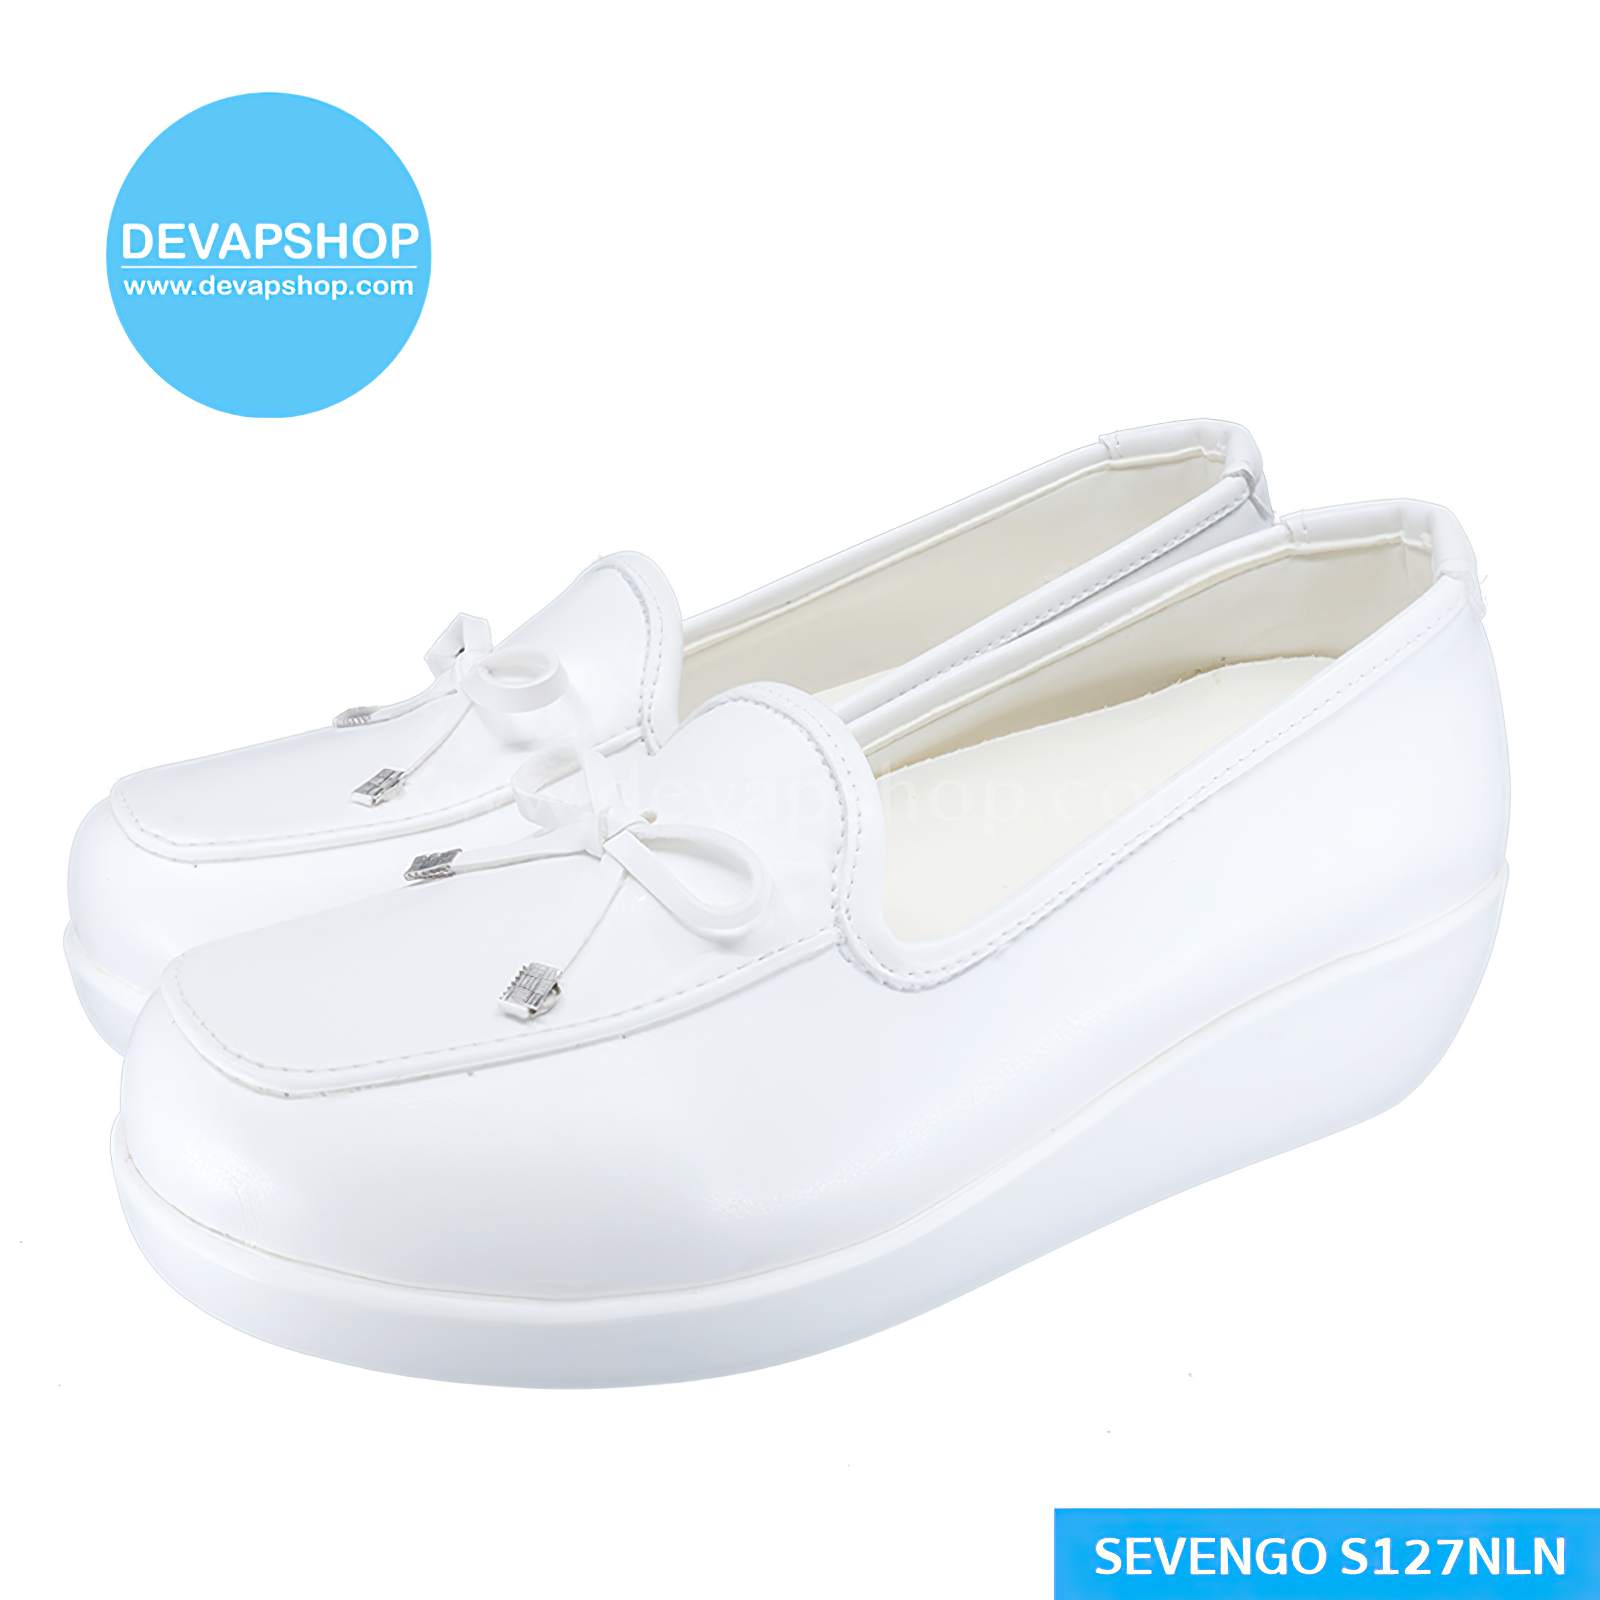 SEVENGO รหัส S127NLN รองเท้าพยาบาล รองเท้านักศึกษาพยาบาล รองเท้าสีขาว Nurse Shoes By DEVAPSHOP สี สีขาว สี สีขาว